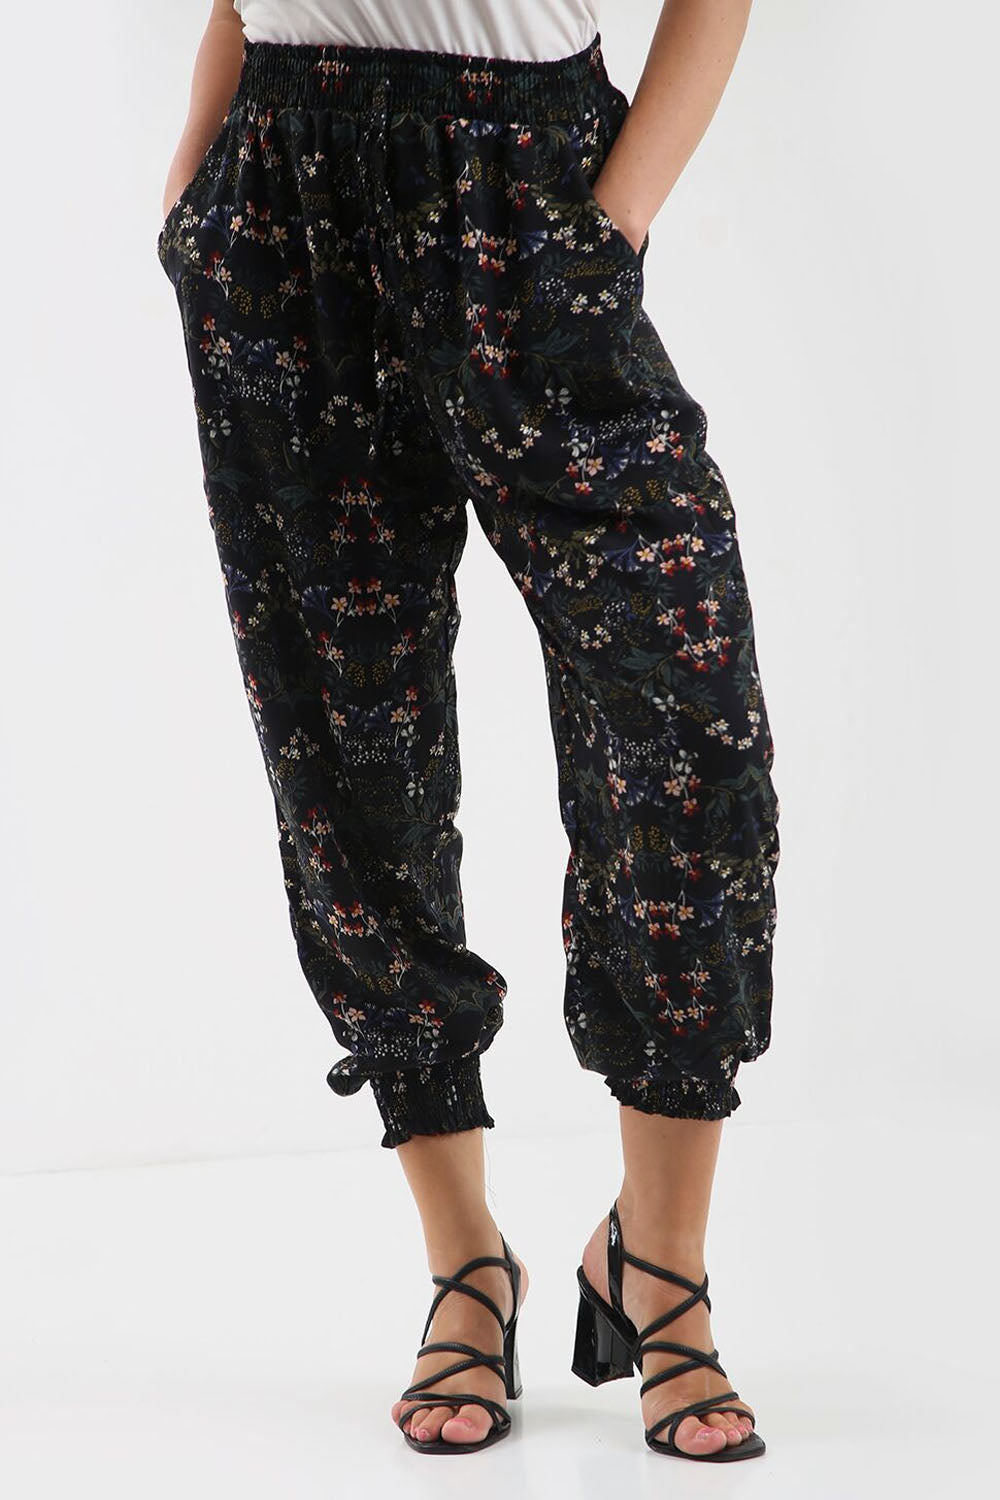 High Waisted Black Floral Chiffon Cuffed Leg Trousers - bejealous-com